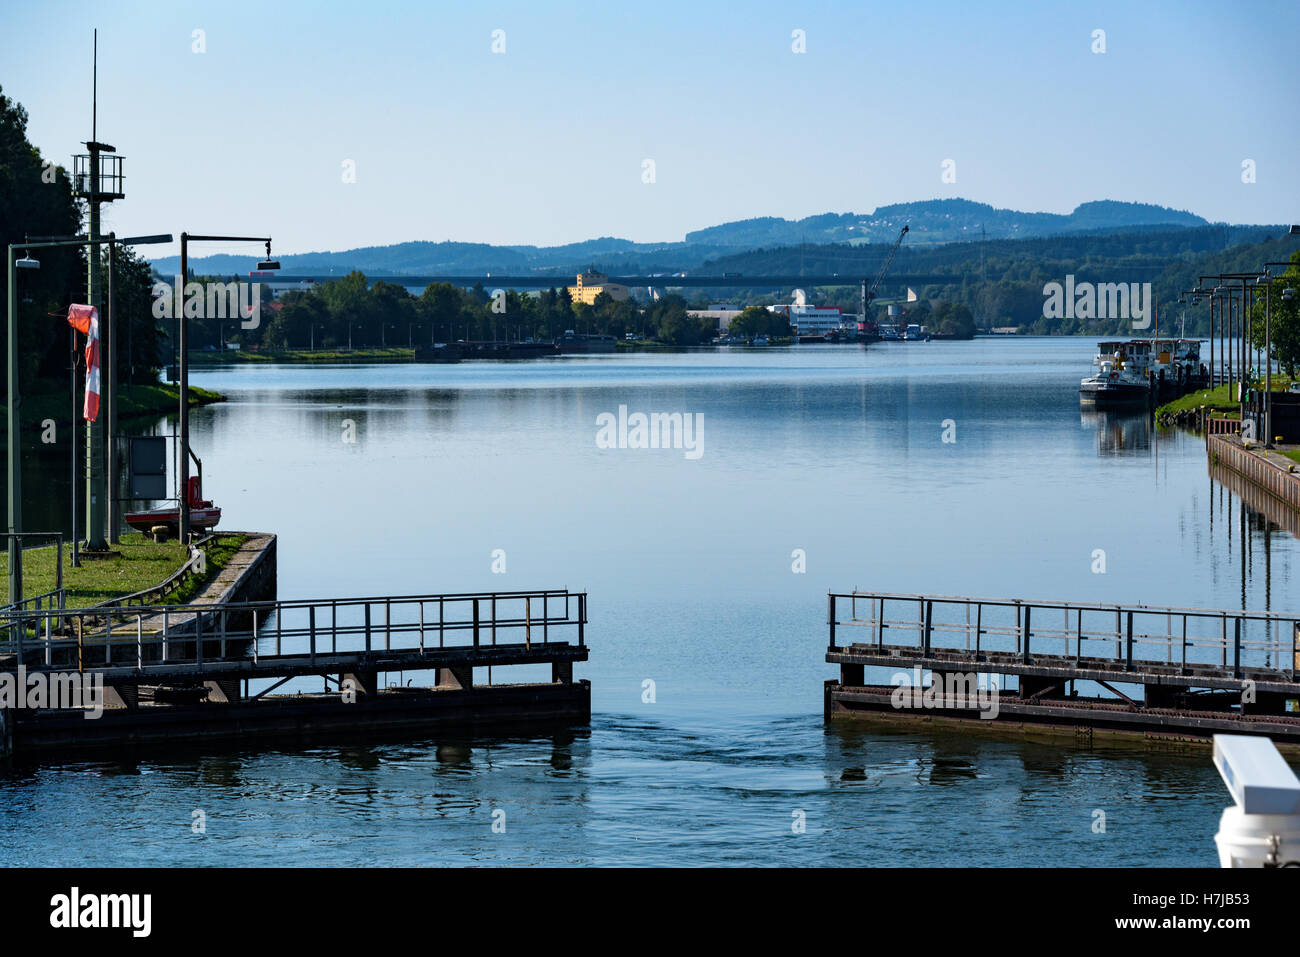 Kachlet lock, Passau, germany. Stock Photo